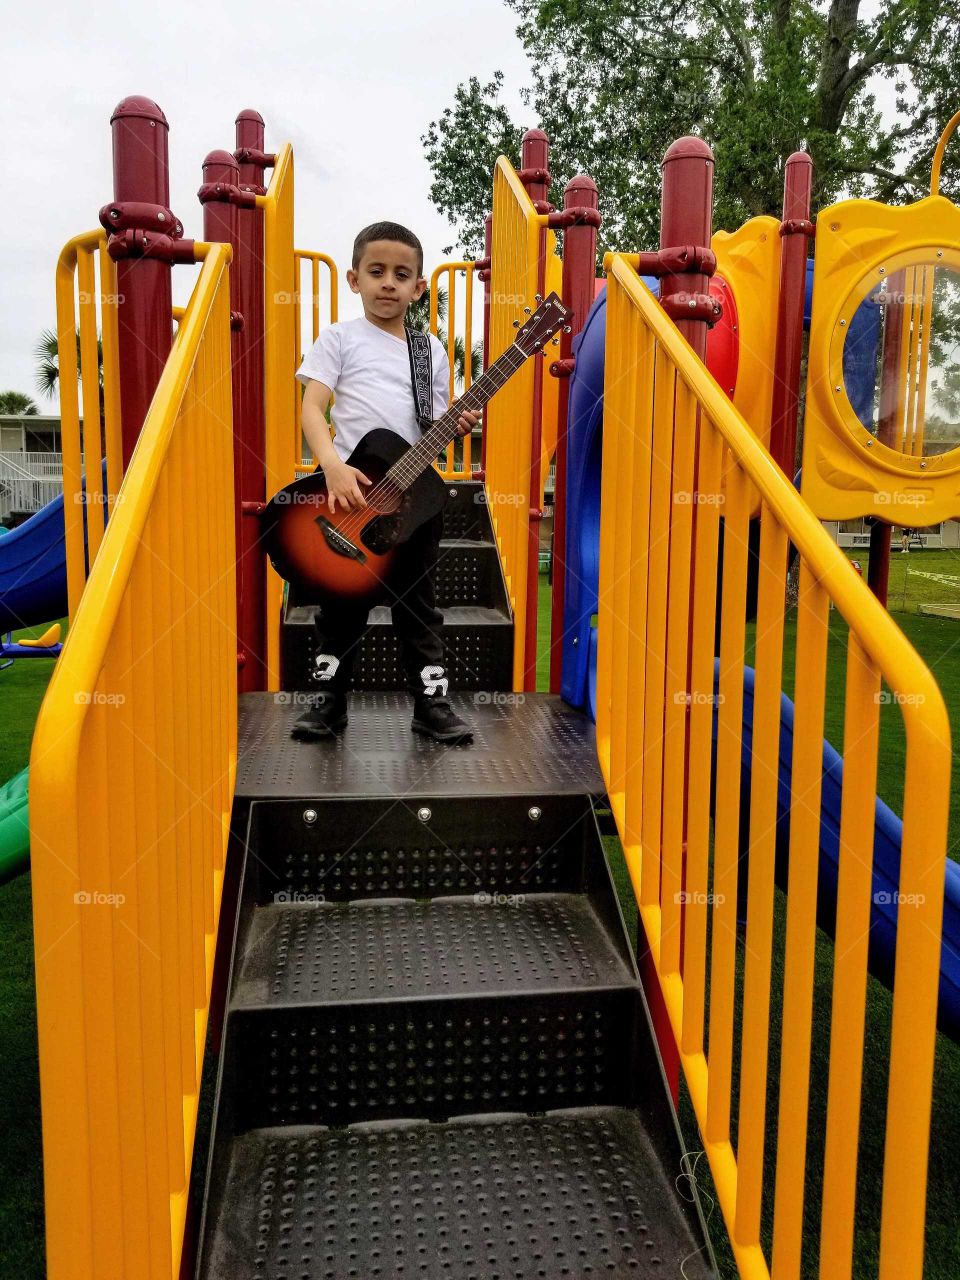 Acoustic Playground